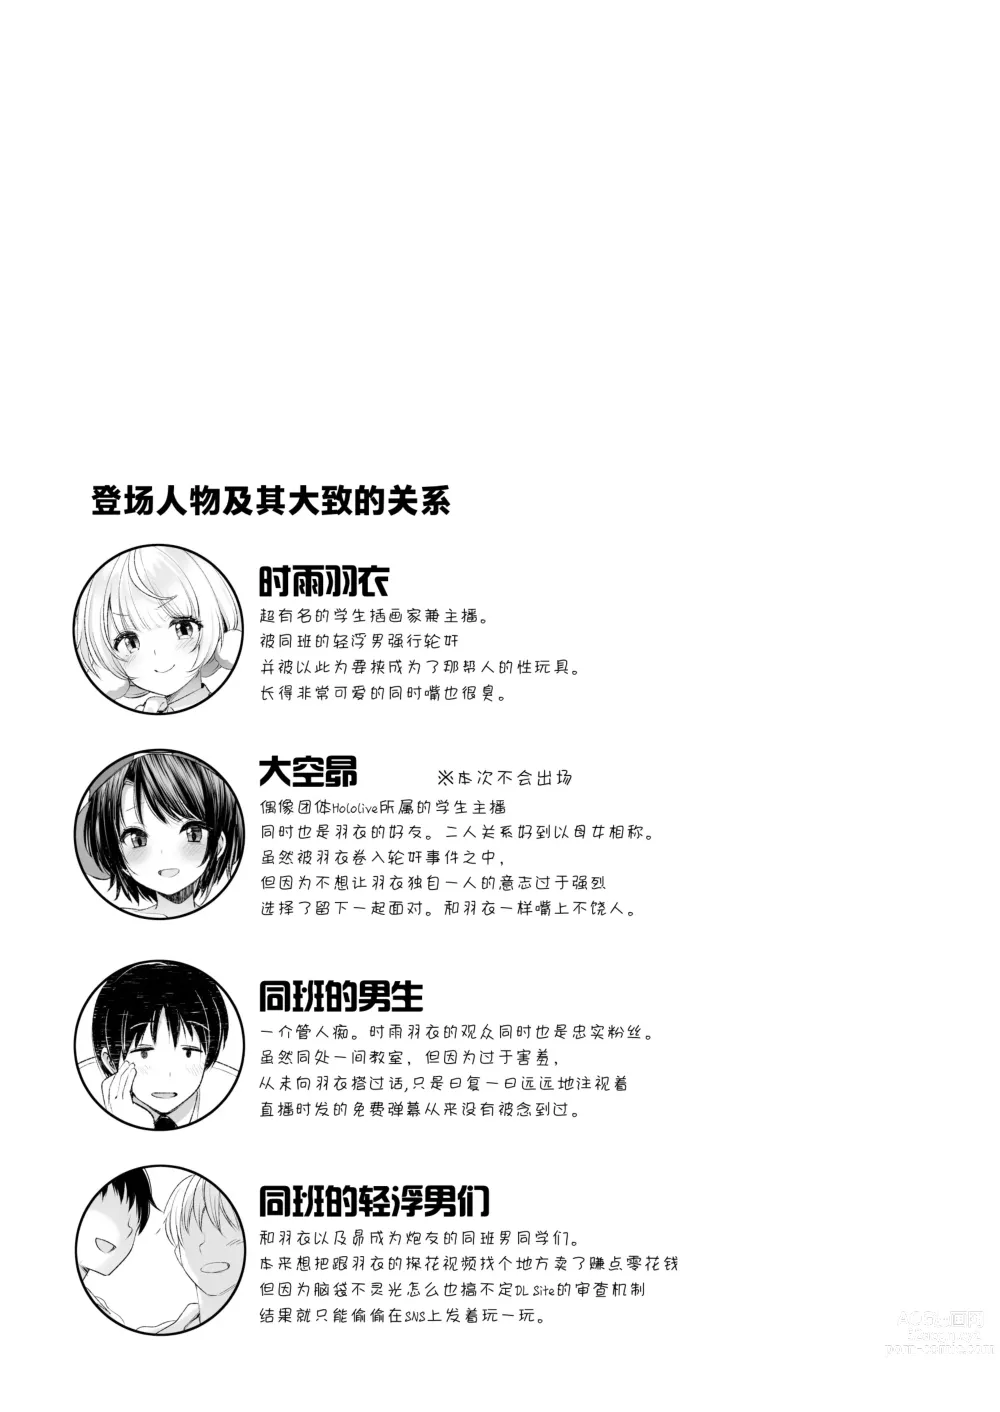 Page 4 of doujinshi 偶像主播时雨羽衣的秘密视频发布2